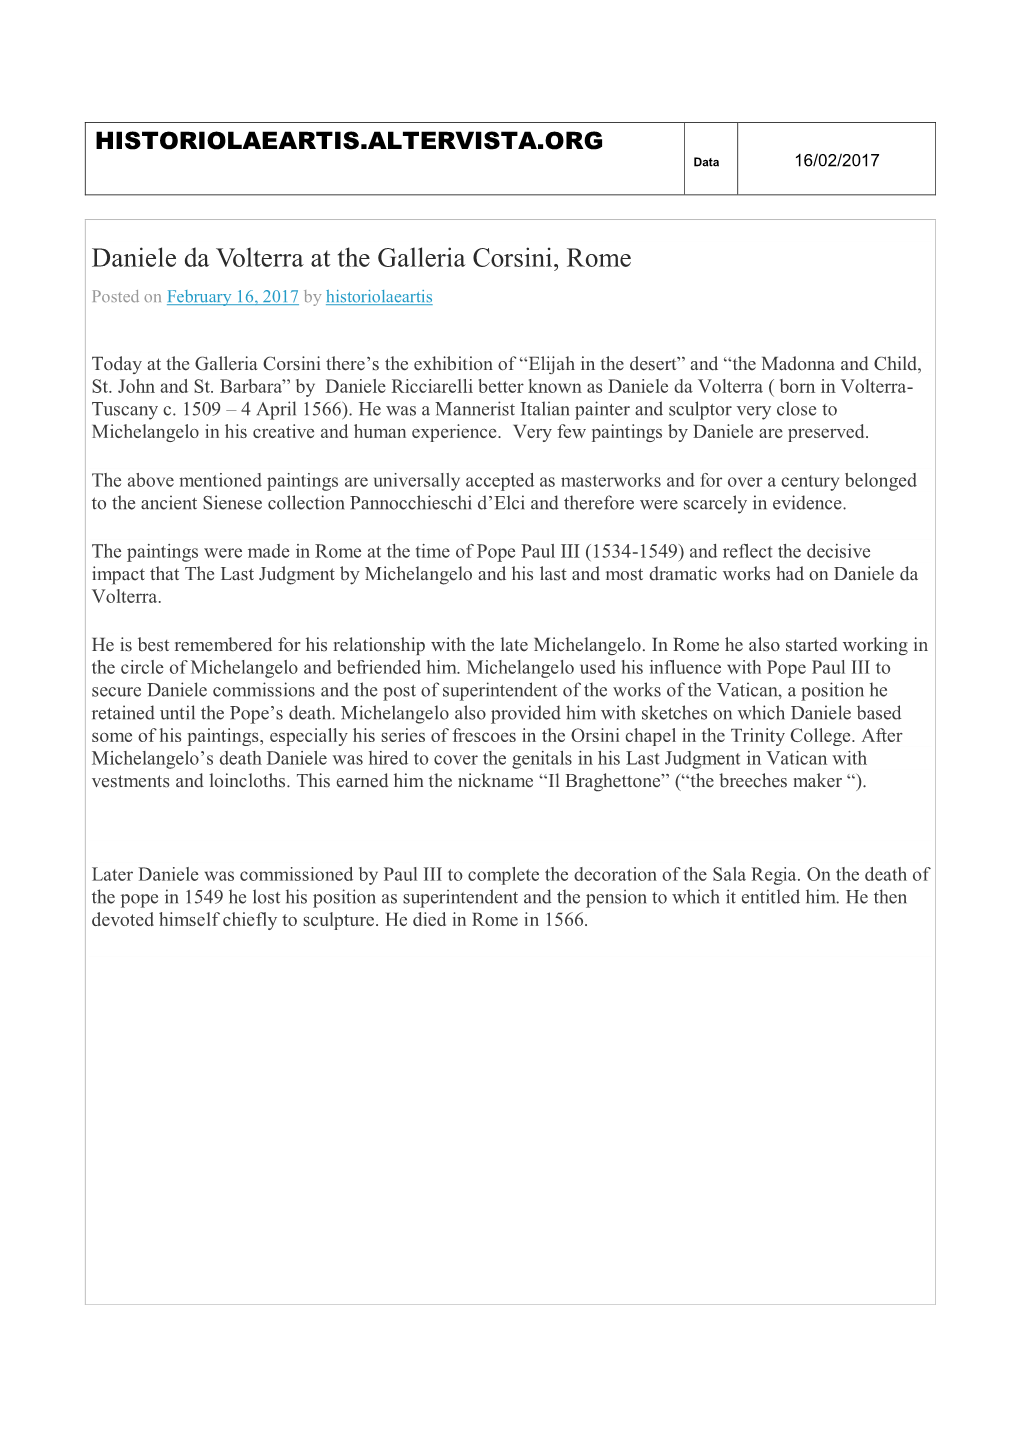 Daniele Da Volterra at the Galleria Corsini, Rome Posted on February 16, 2017 by Historiolaeartis